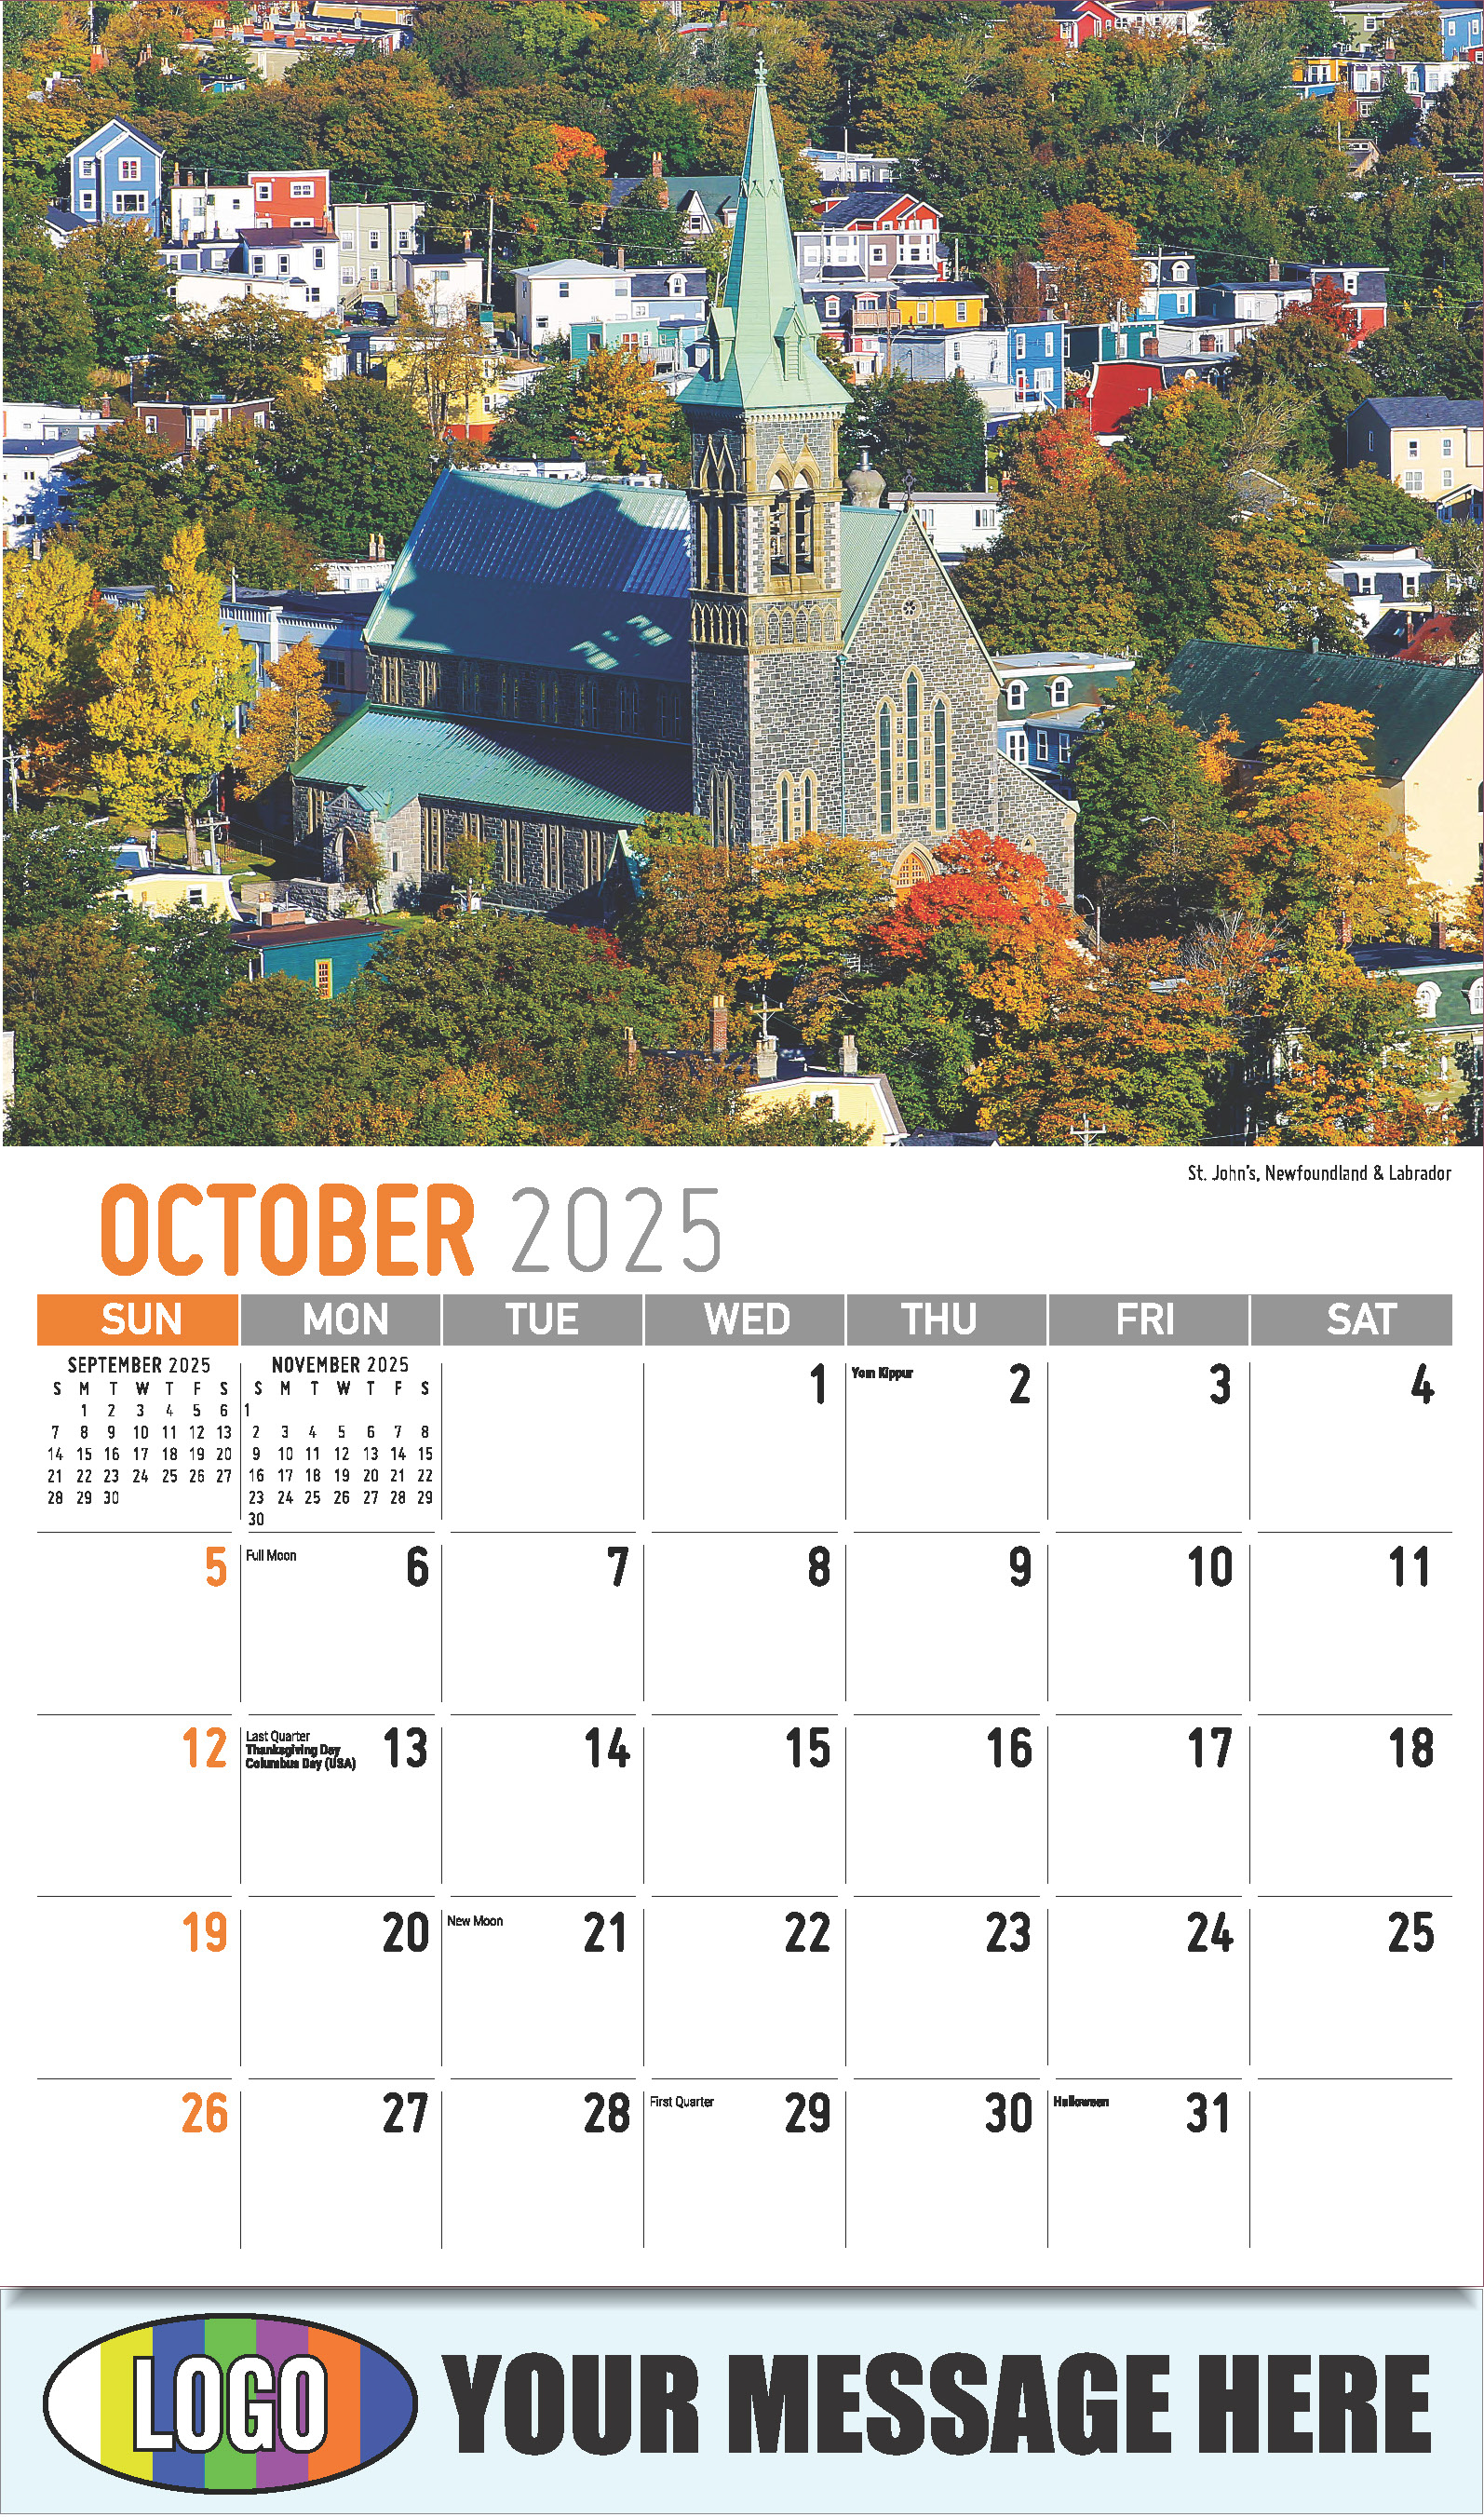 Atlantic Canada Scenic 2025 Business Promotion Calendar - October